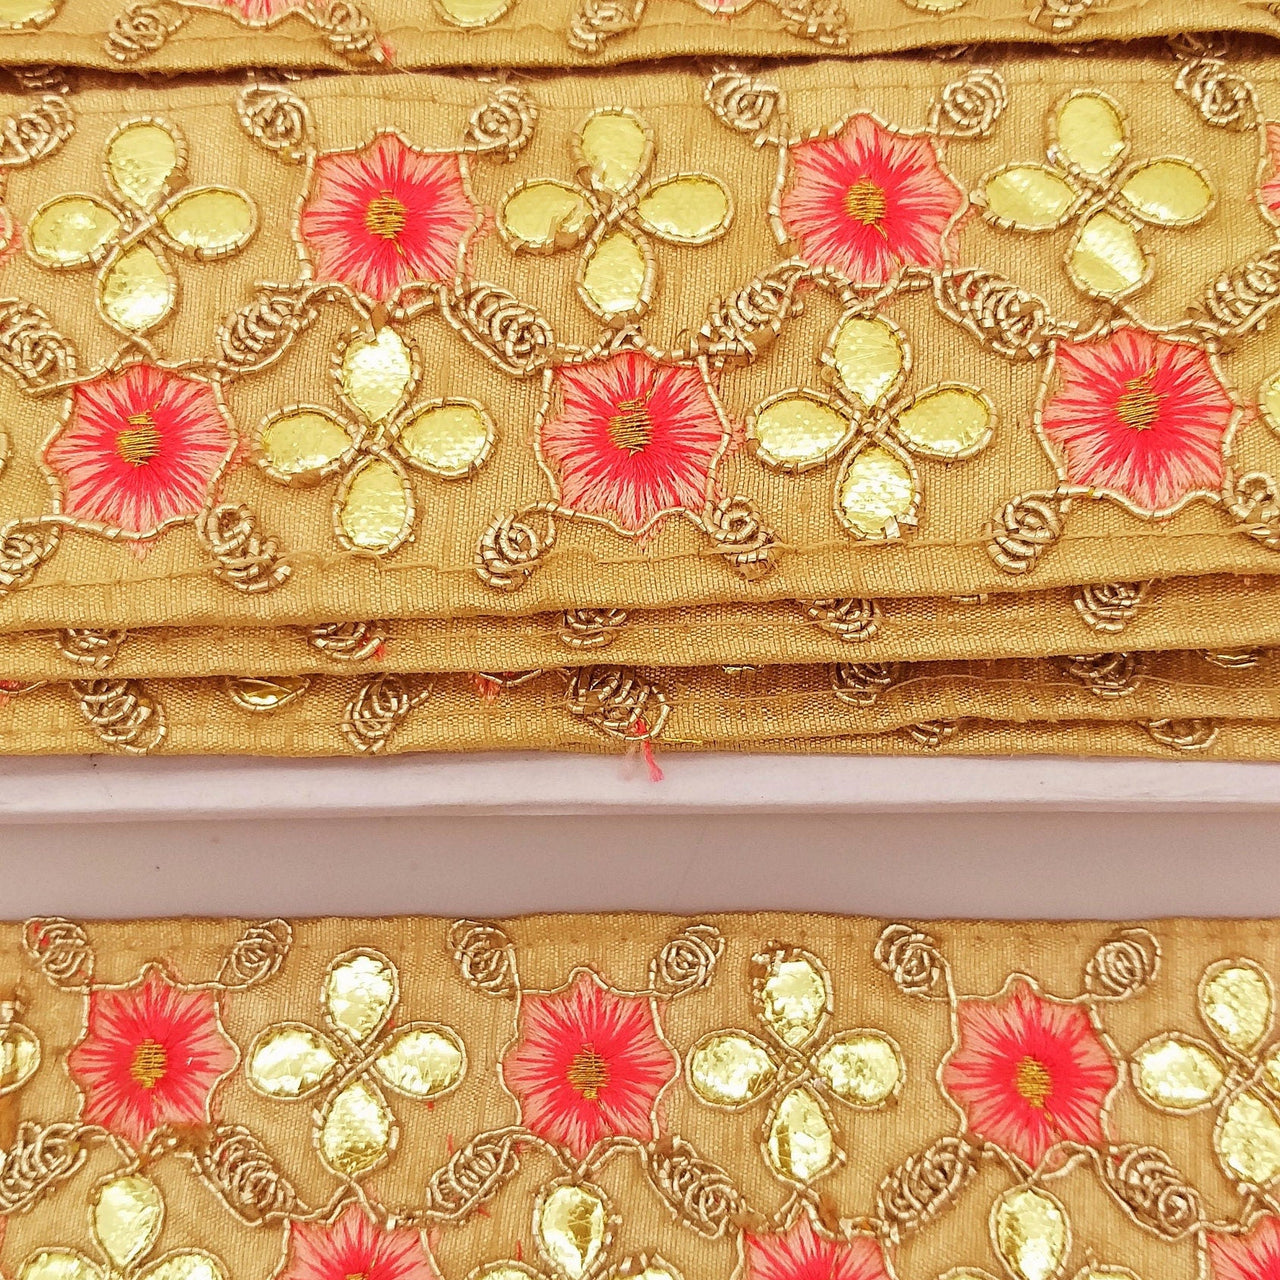 Beige Art Silk Fabric Trim, Salmon Pink & Gold Floral Embroidery Gota Patti Indian Sari Border Trim By Yard Decorative Trim Craft Lace